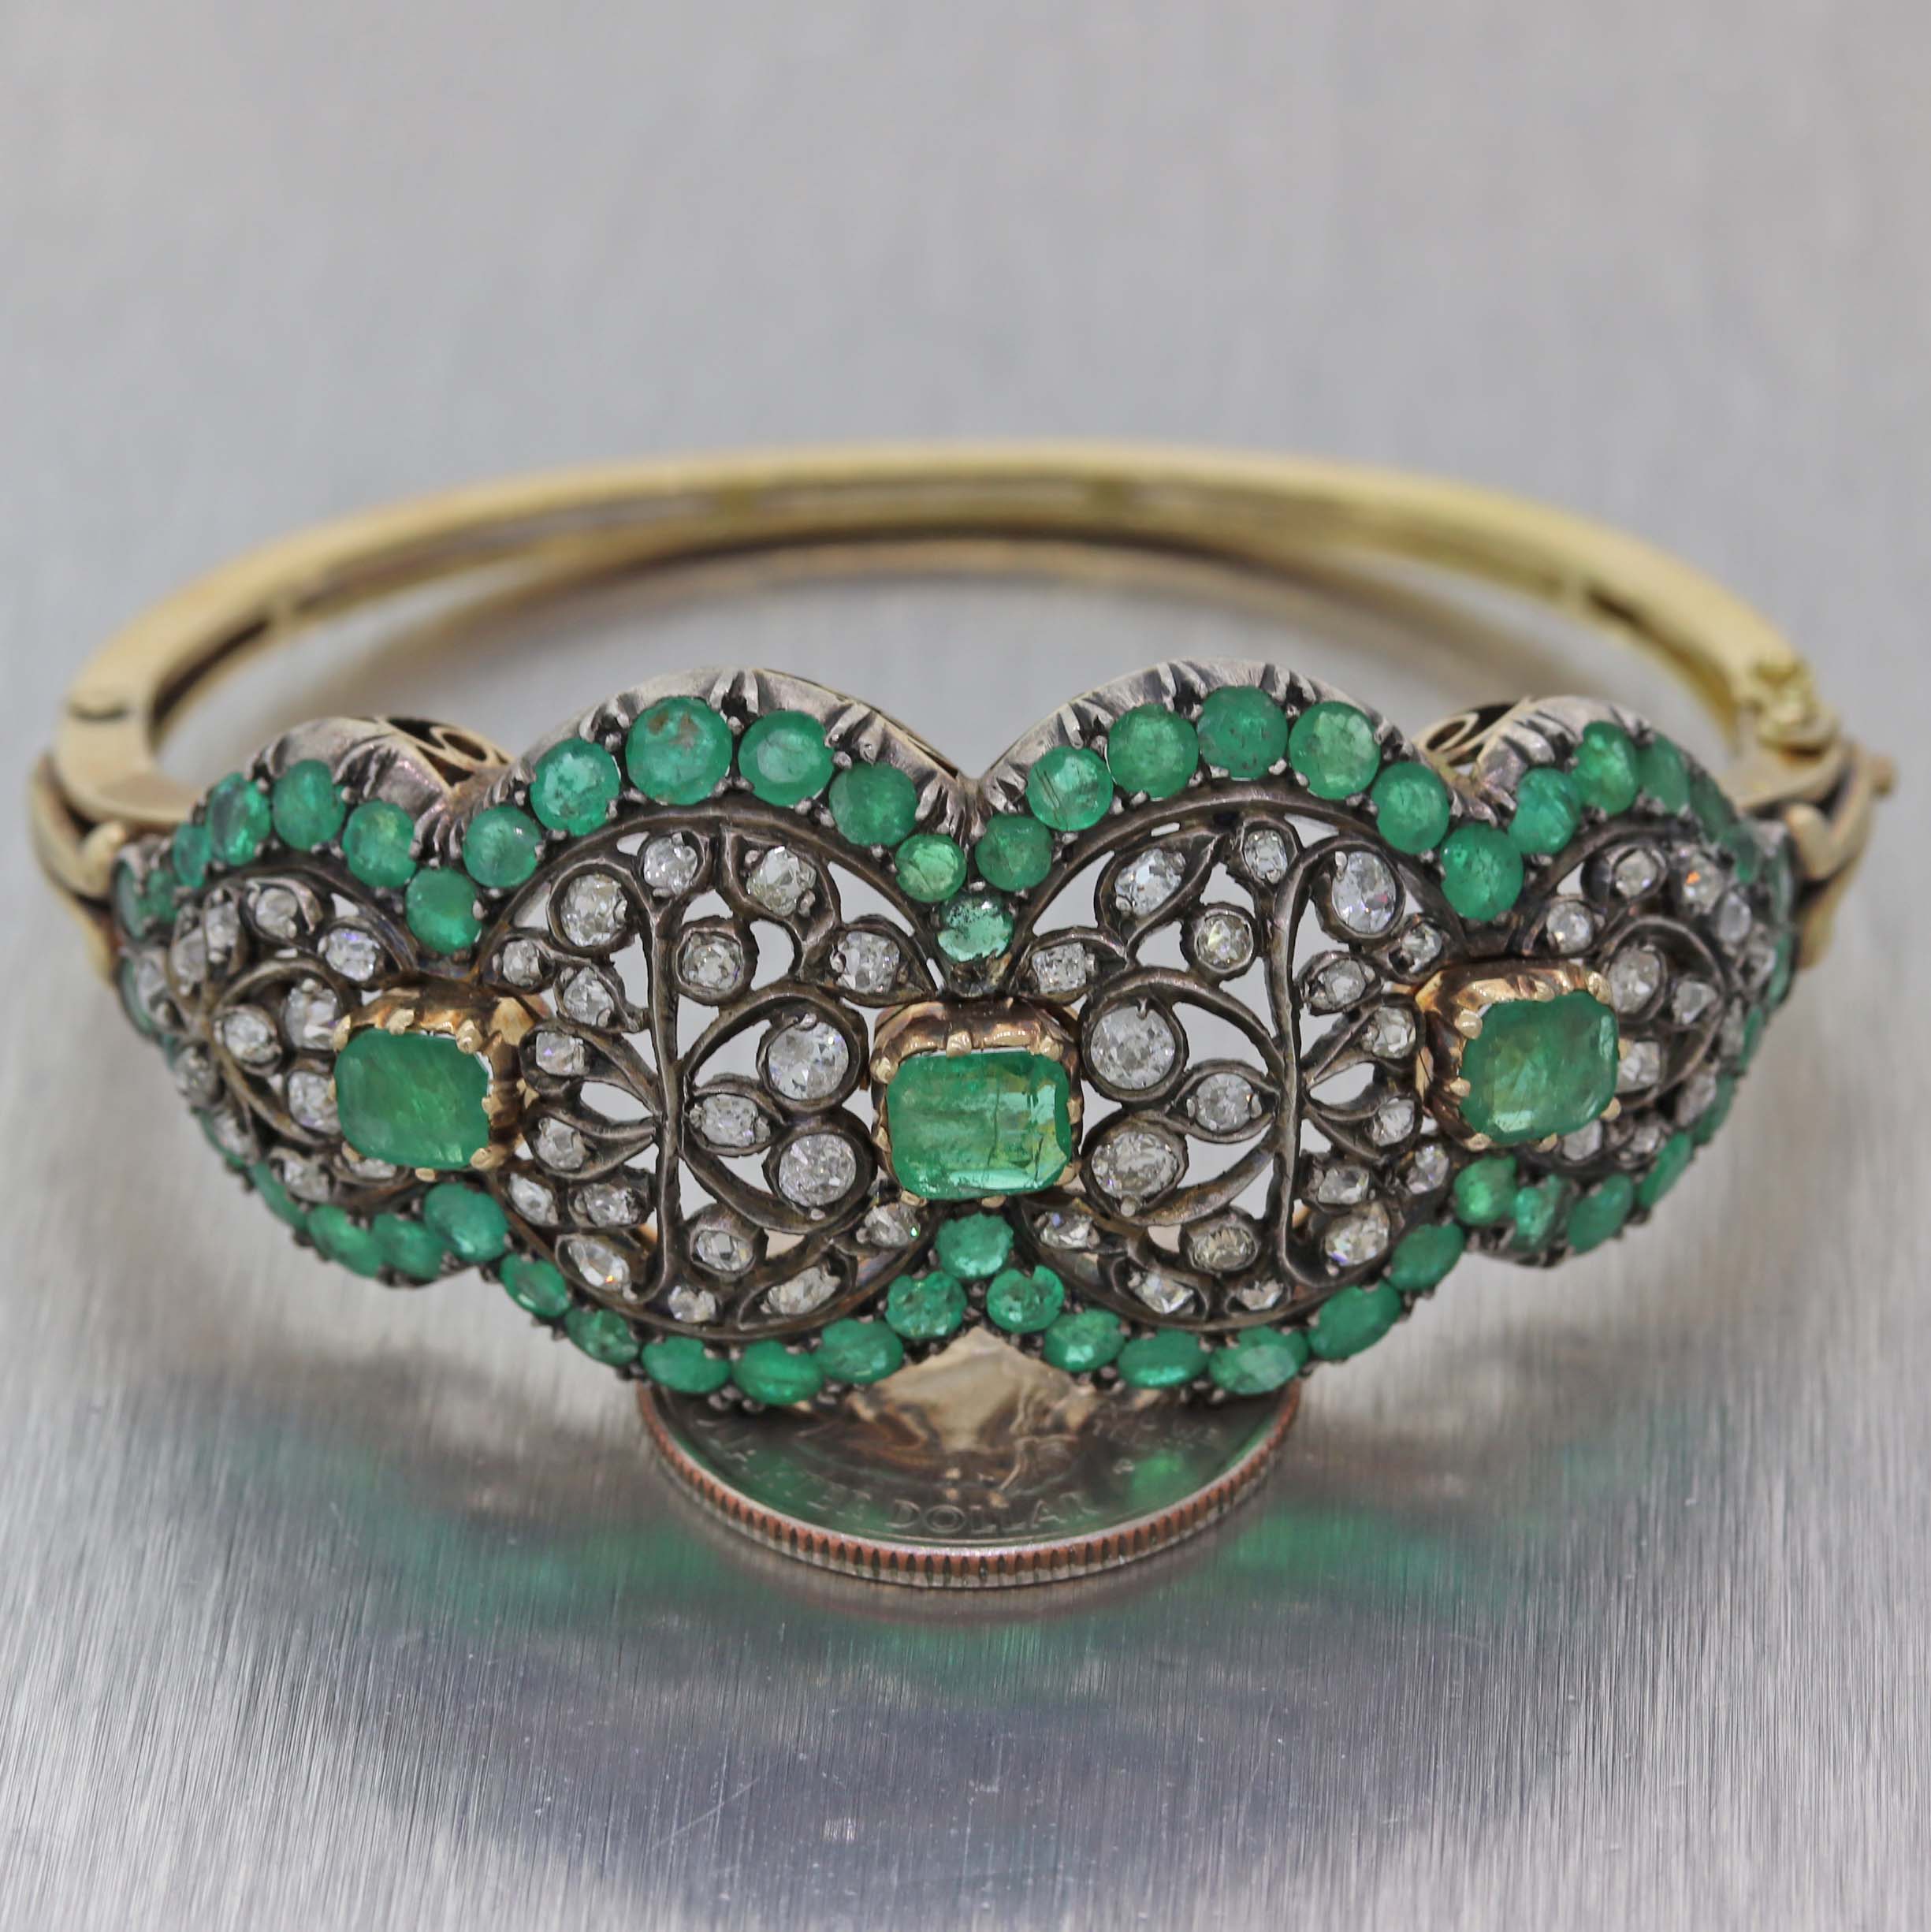 1890s Antique Victorian Silver on Gold 5ct Emerald Rose Cut Diamond Bangle Bracelet